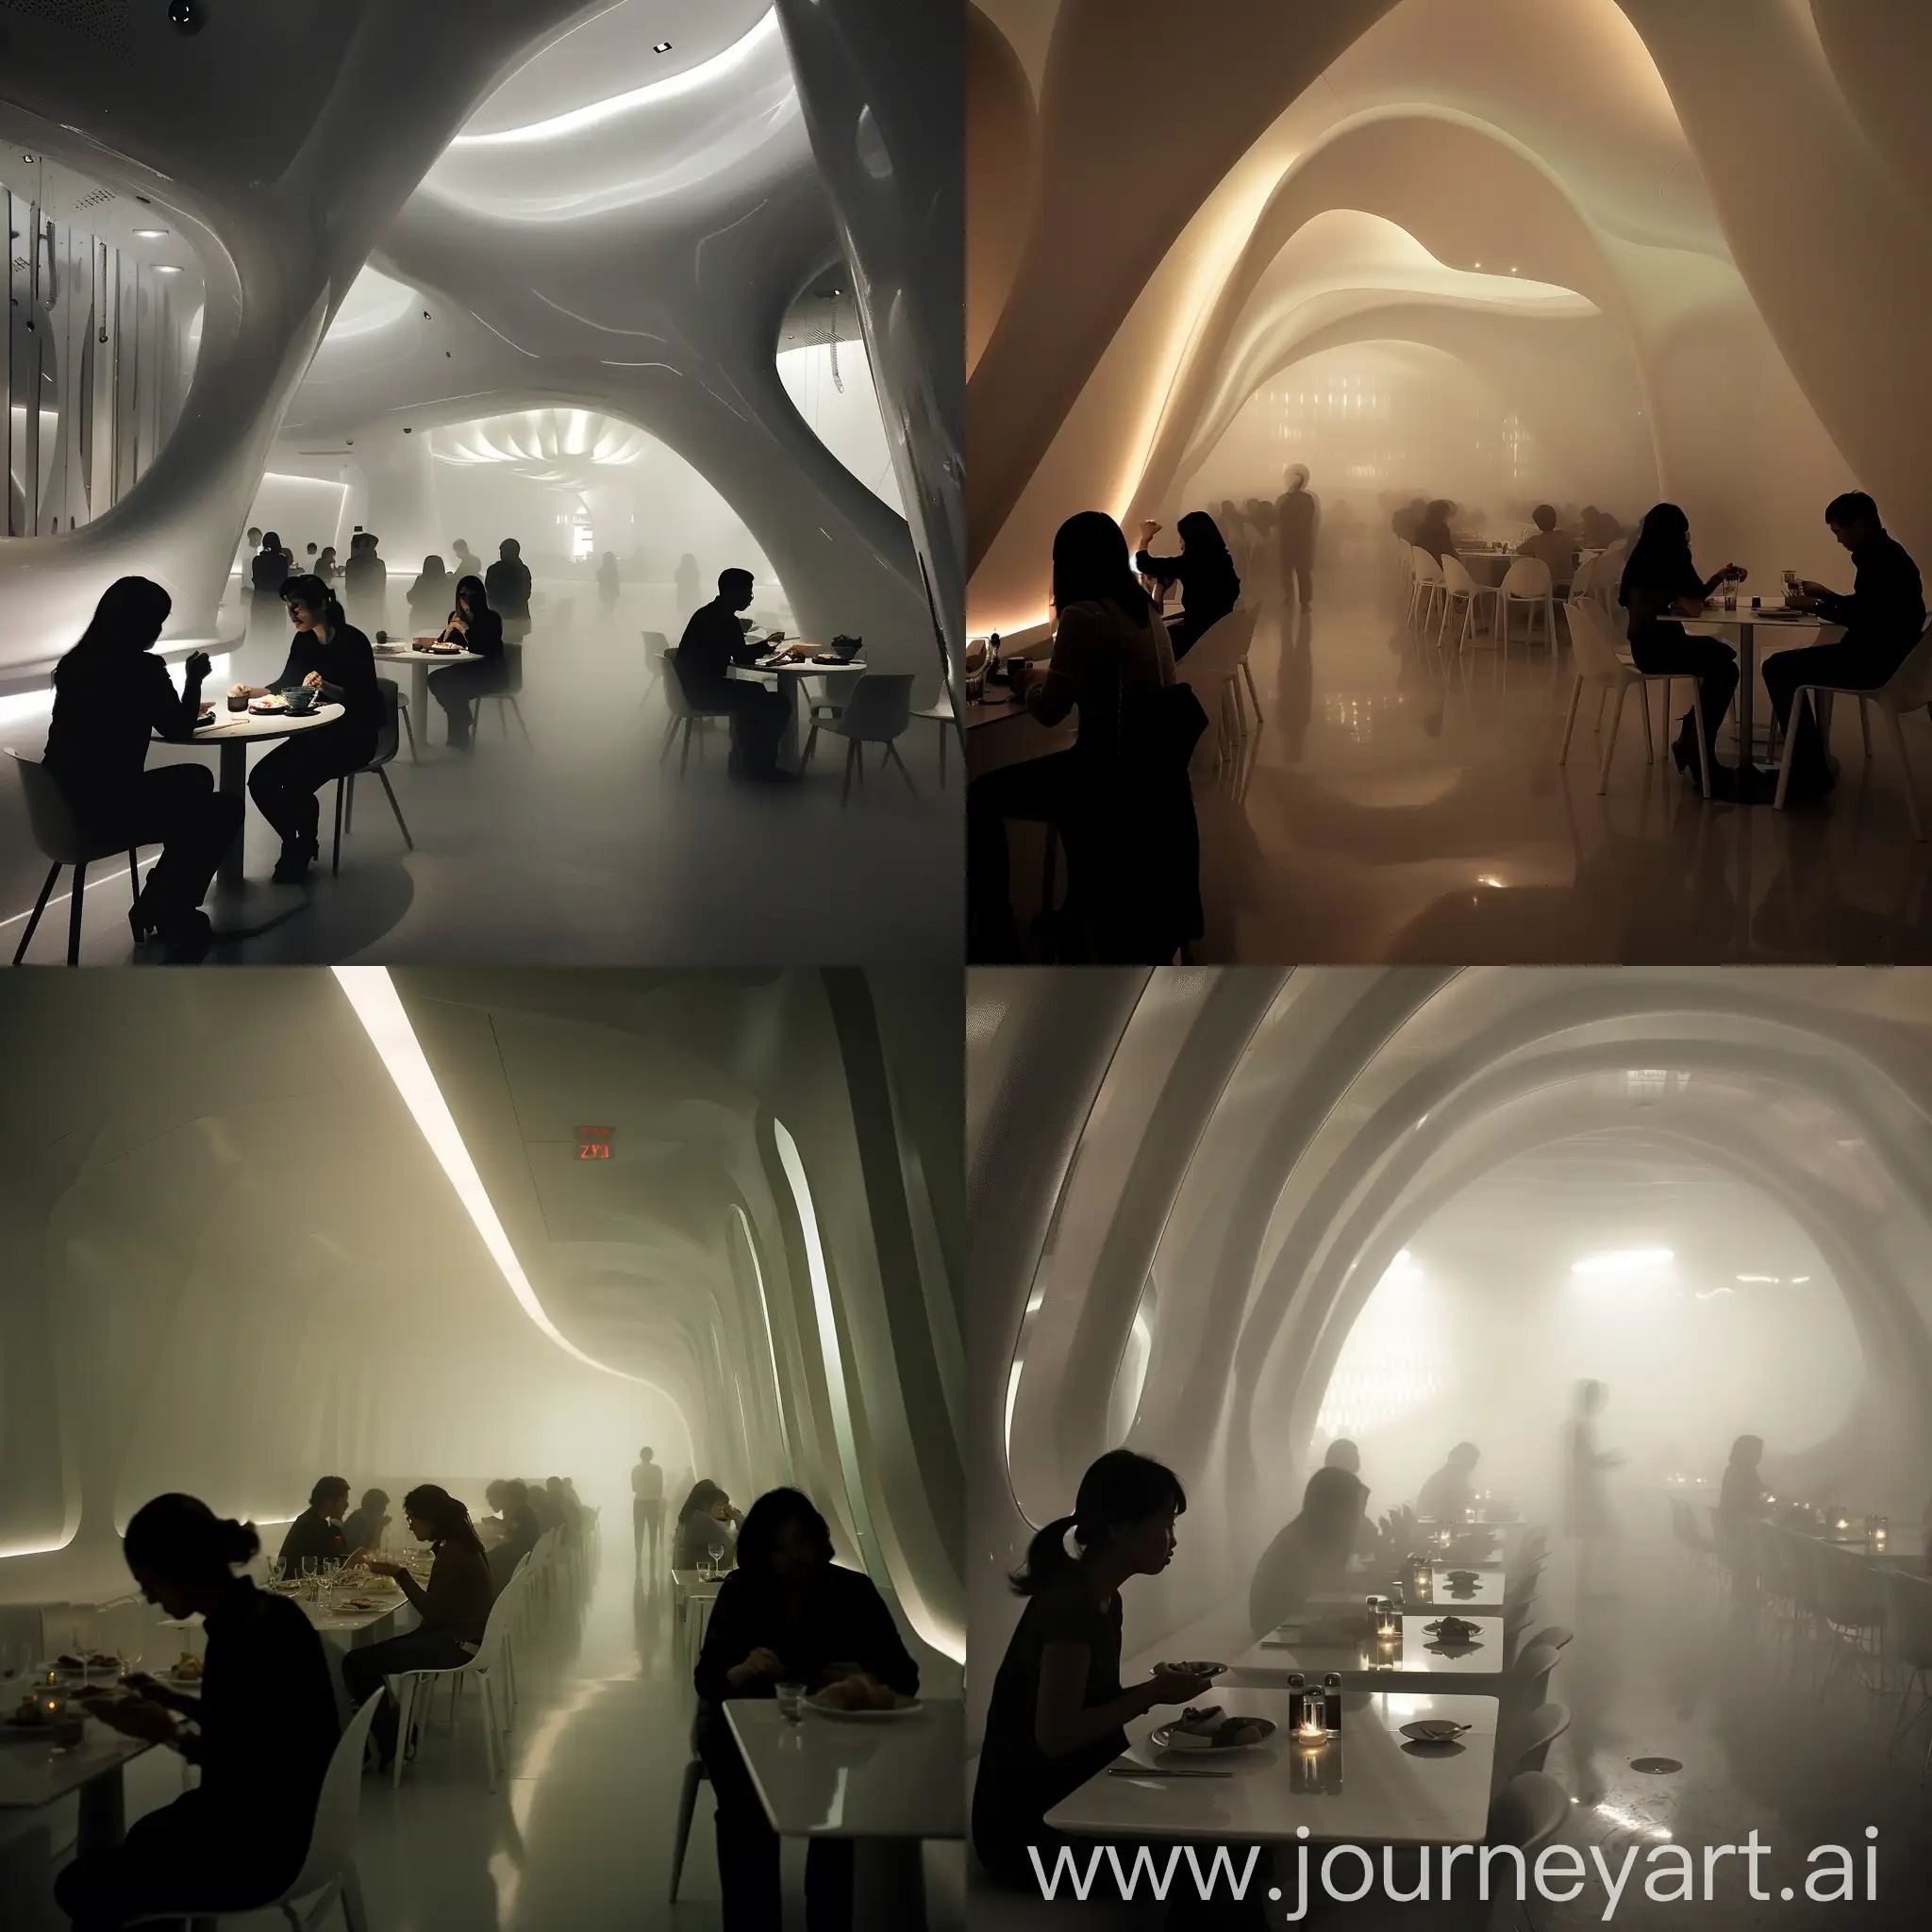 restaurant minimal interior, zaha hadid style, white, fog, people eating, dark, film aspect ratio